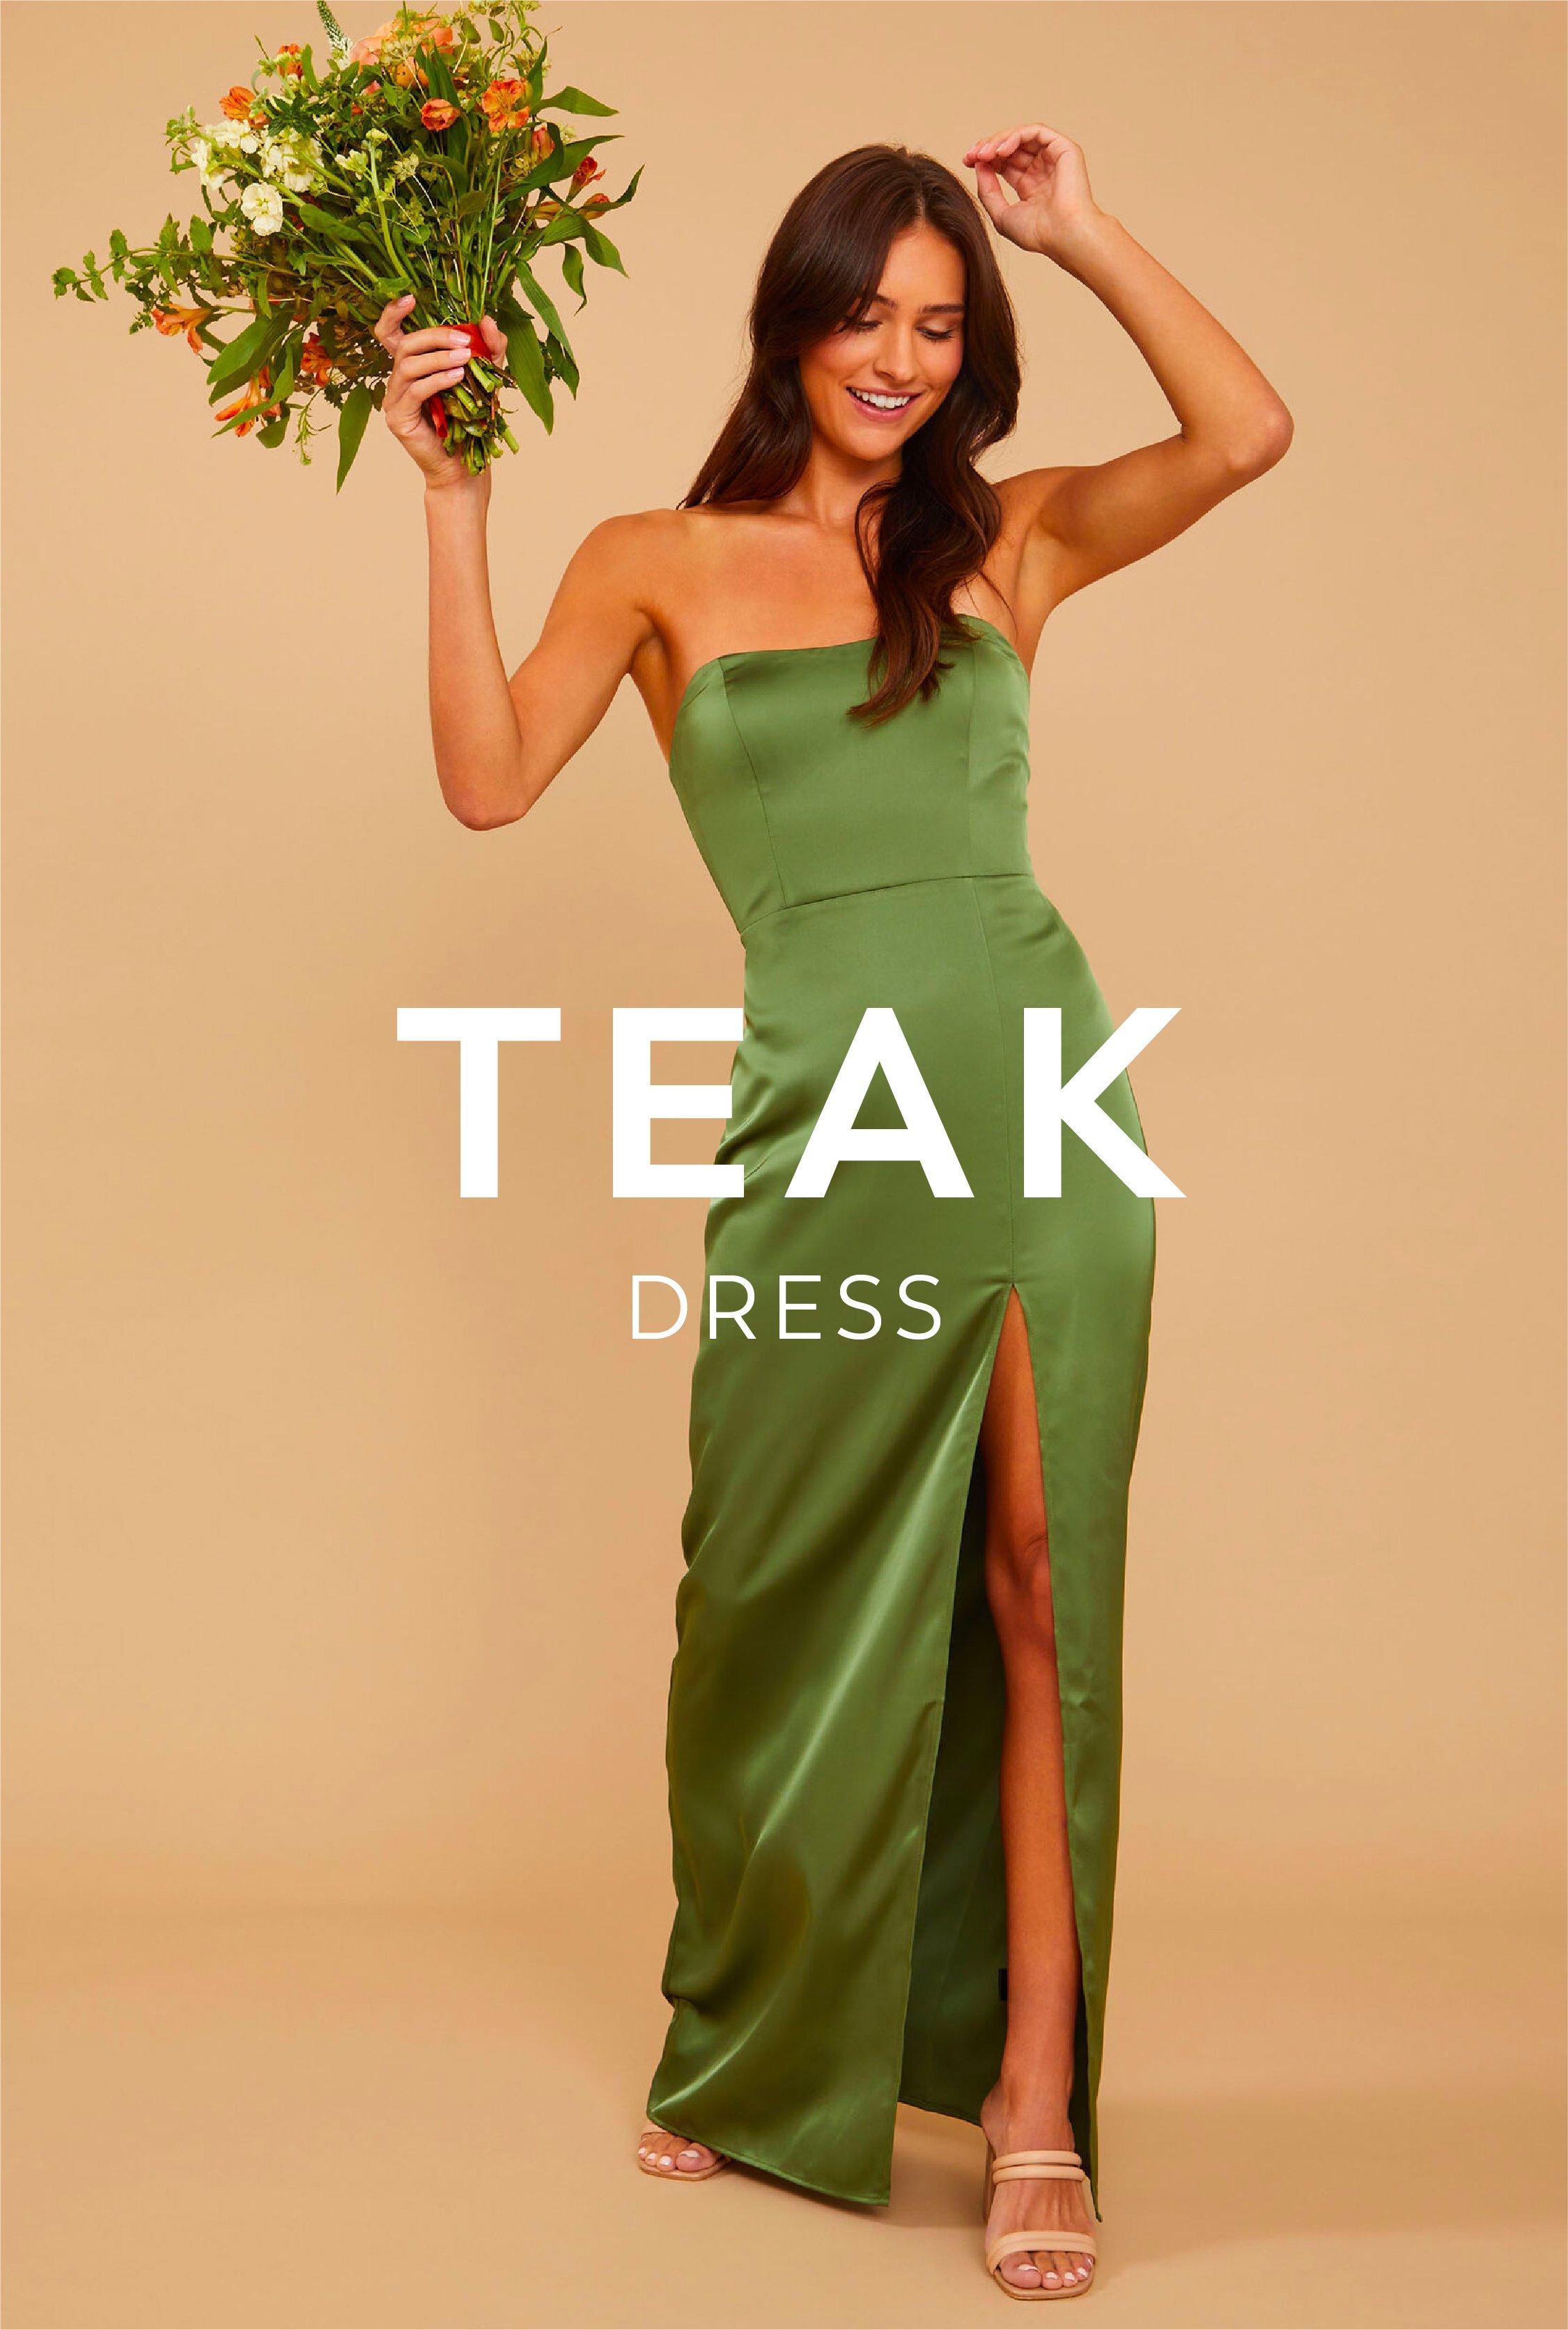 Vow'd Weddings Teak Dress in Emerald Olive Green